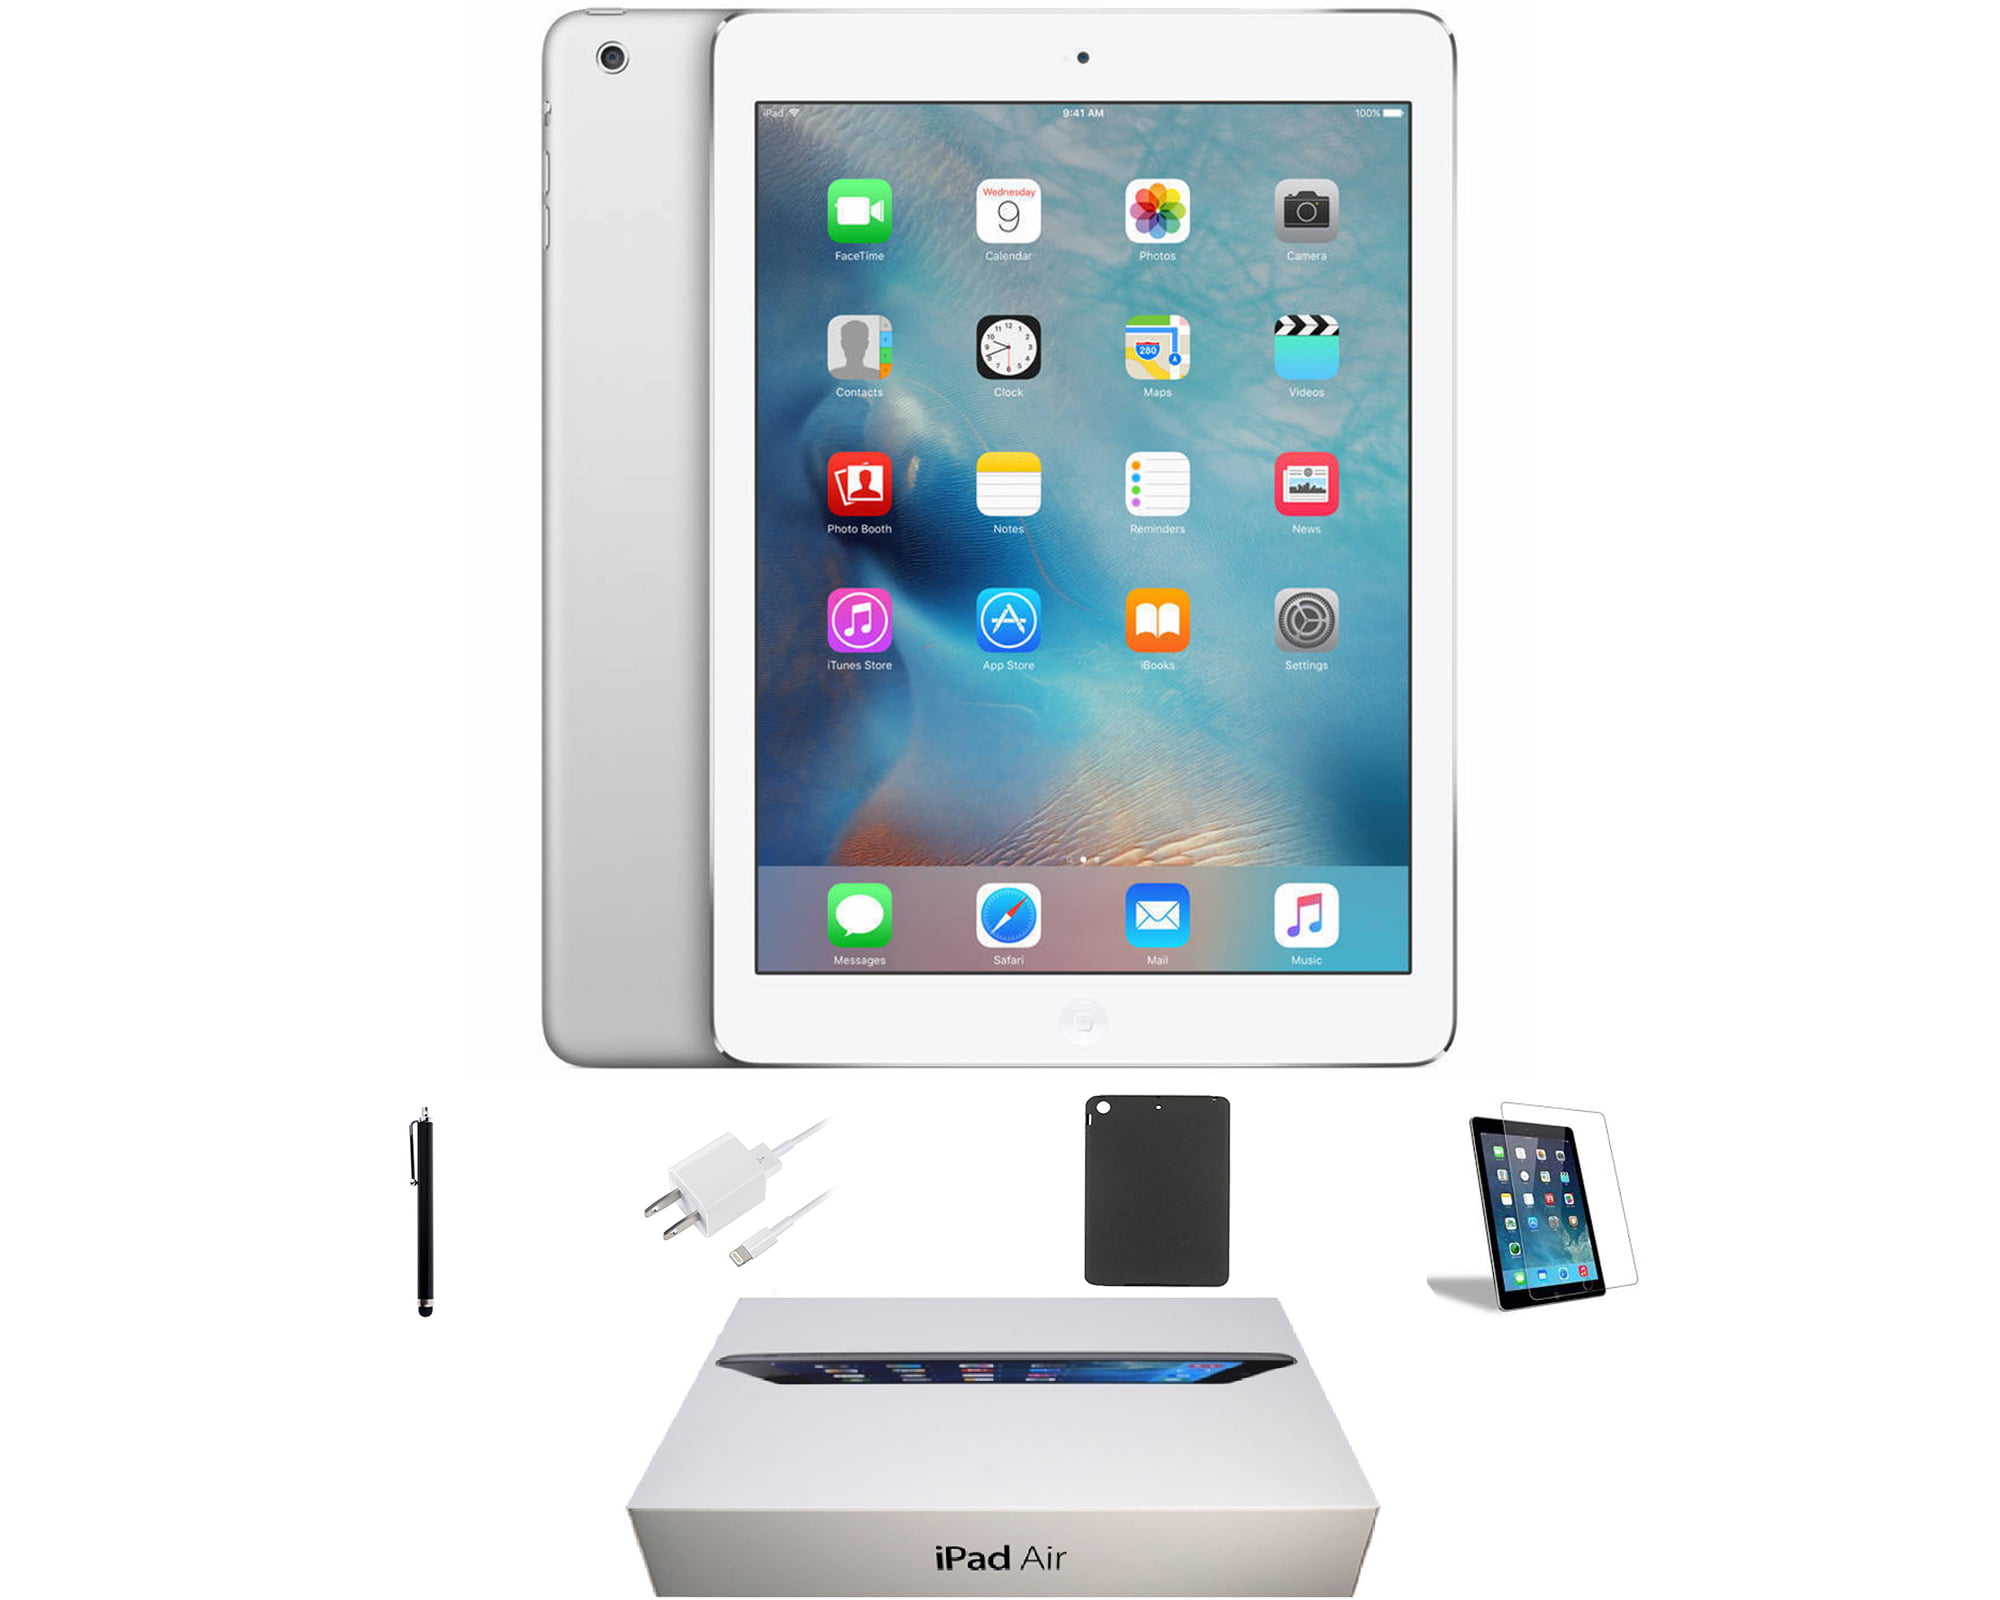 Apple iPad (10.2-inch, Wi-Fi, 32GB) - Space Gray (Latest Model 